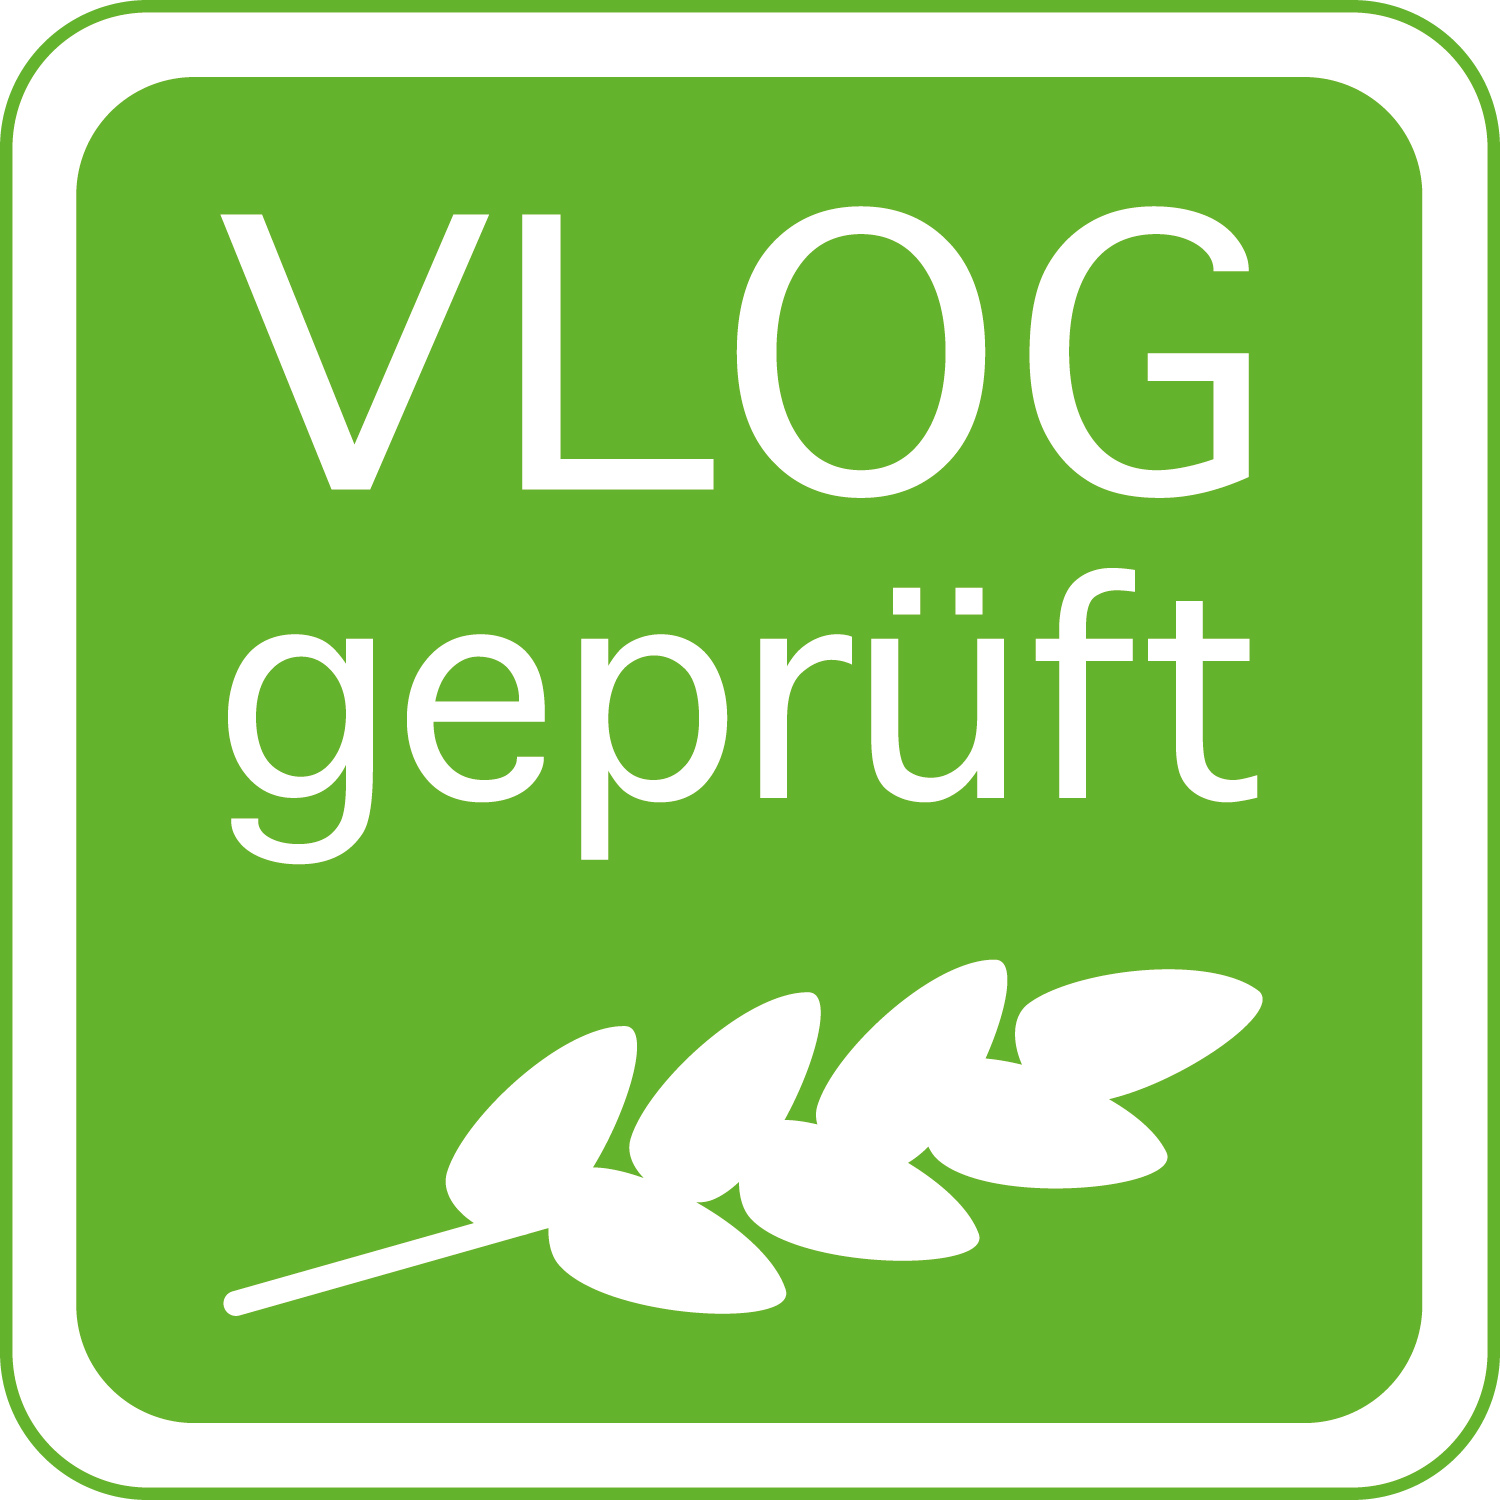 vlog verified seal for color printing